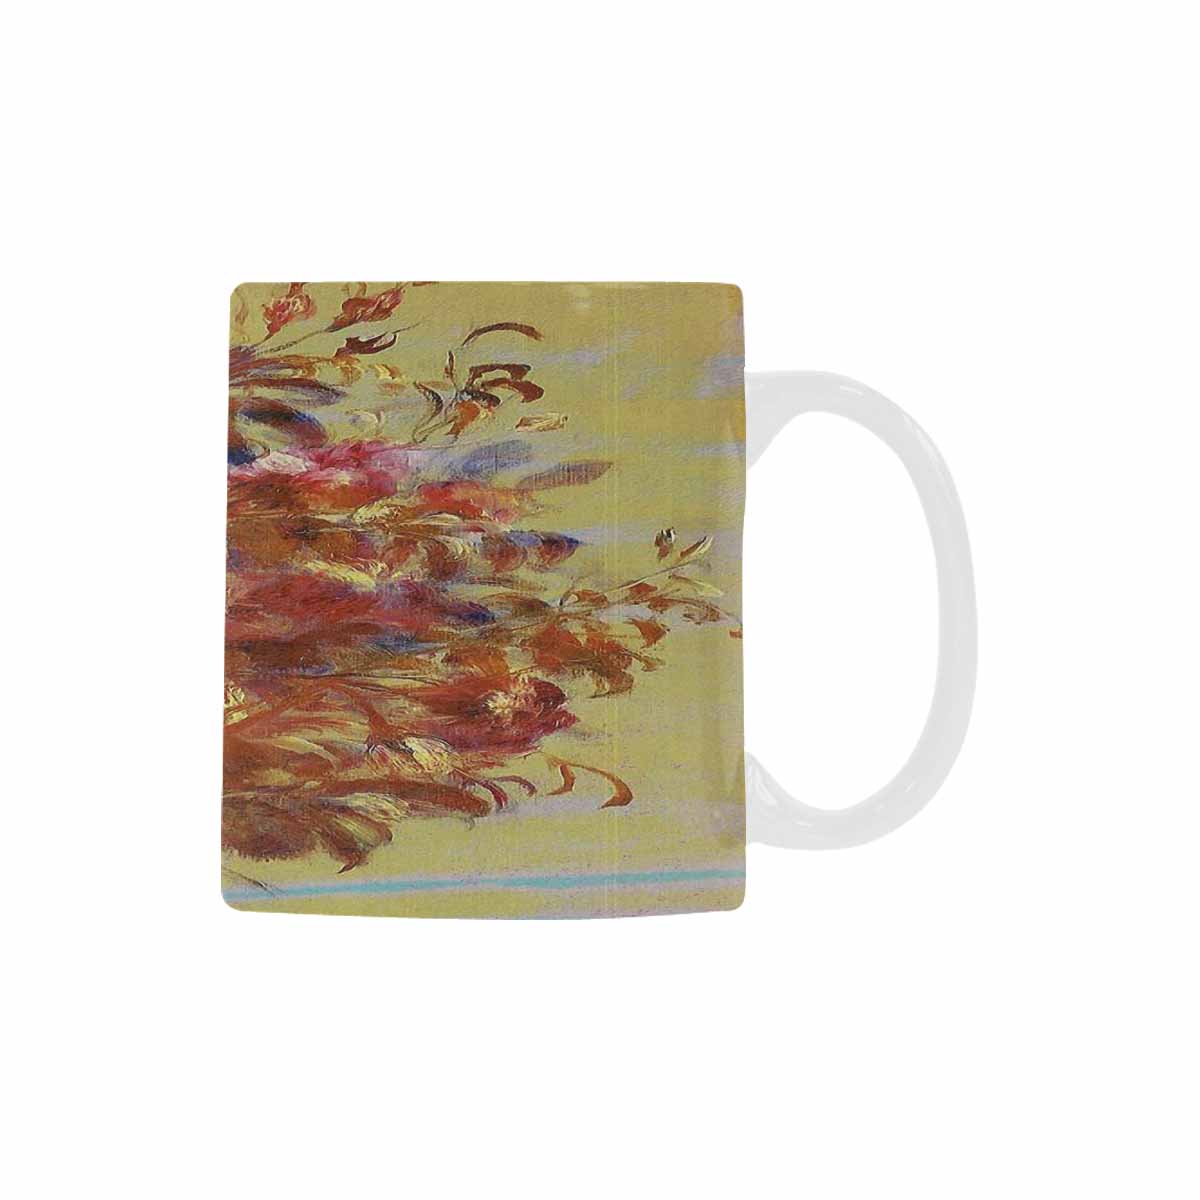 Vintage floral coffee mug or tea cup, Design 11